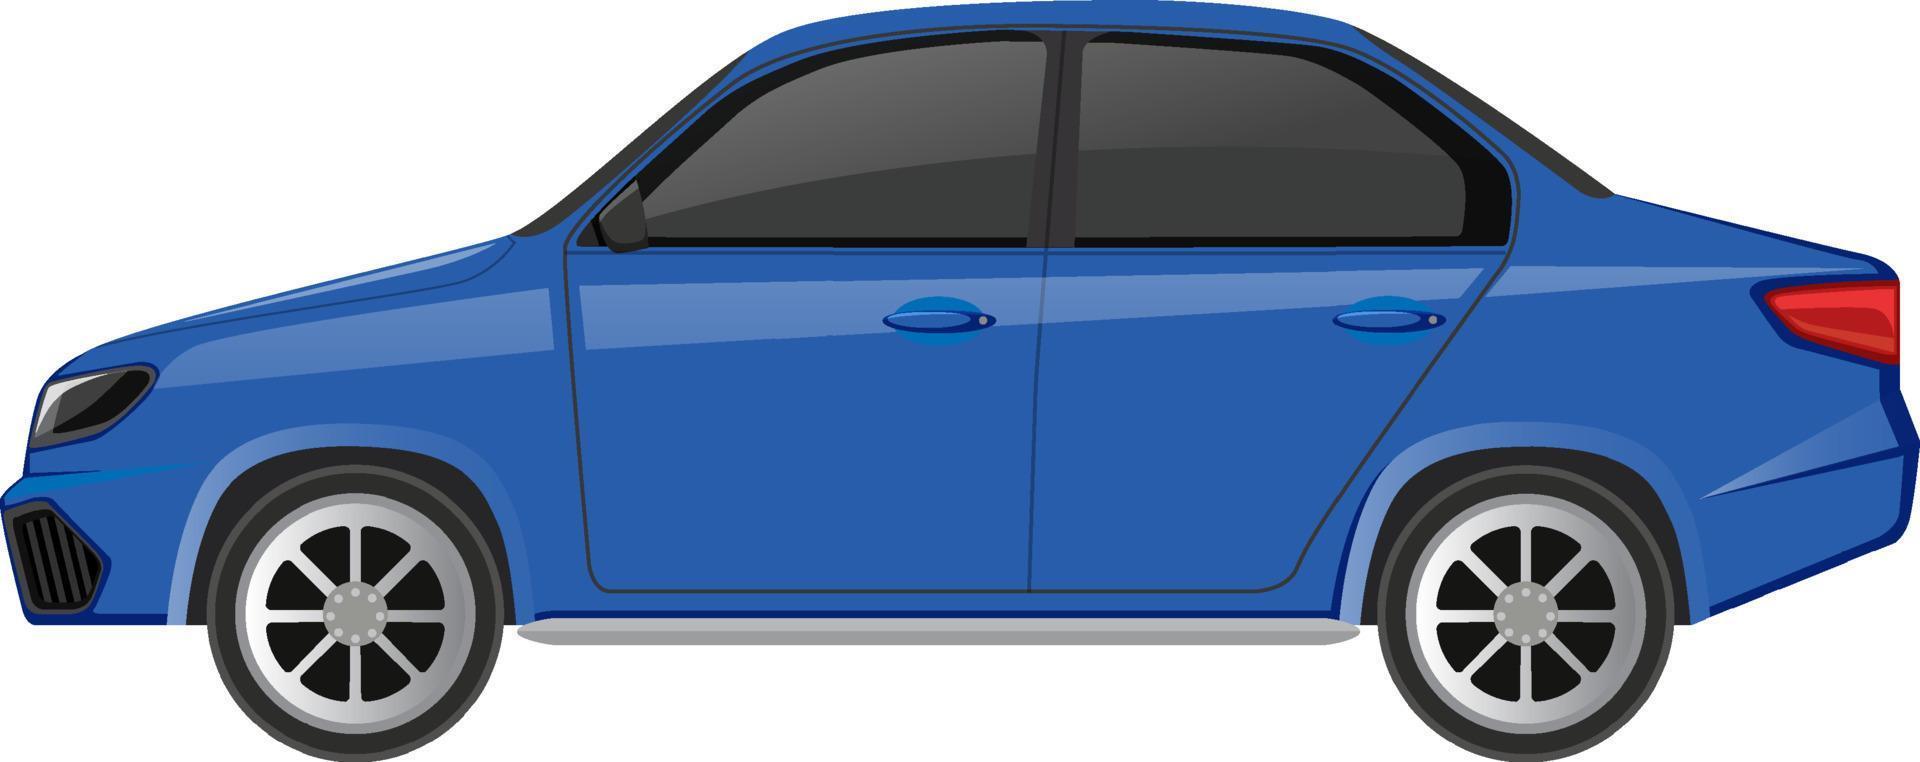 Blue sedan car isolated on white background vector